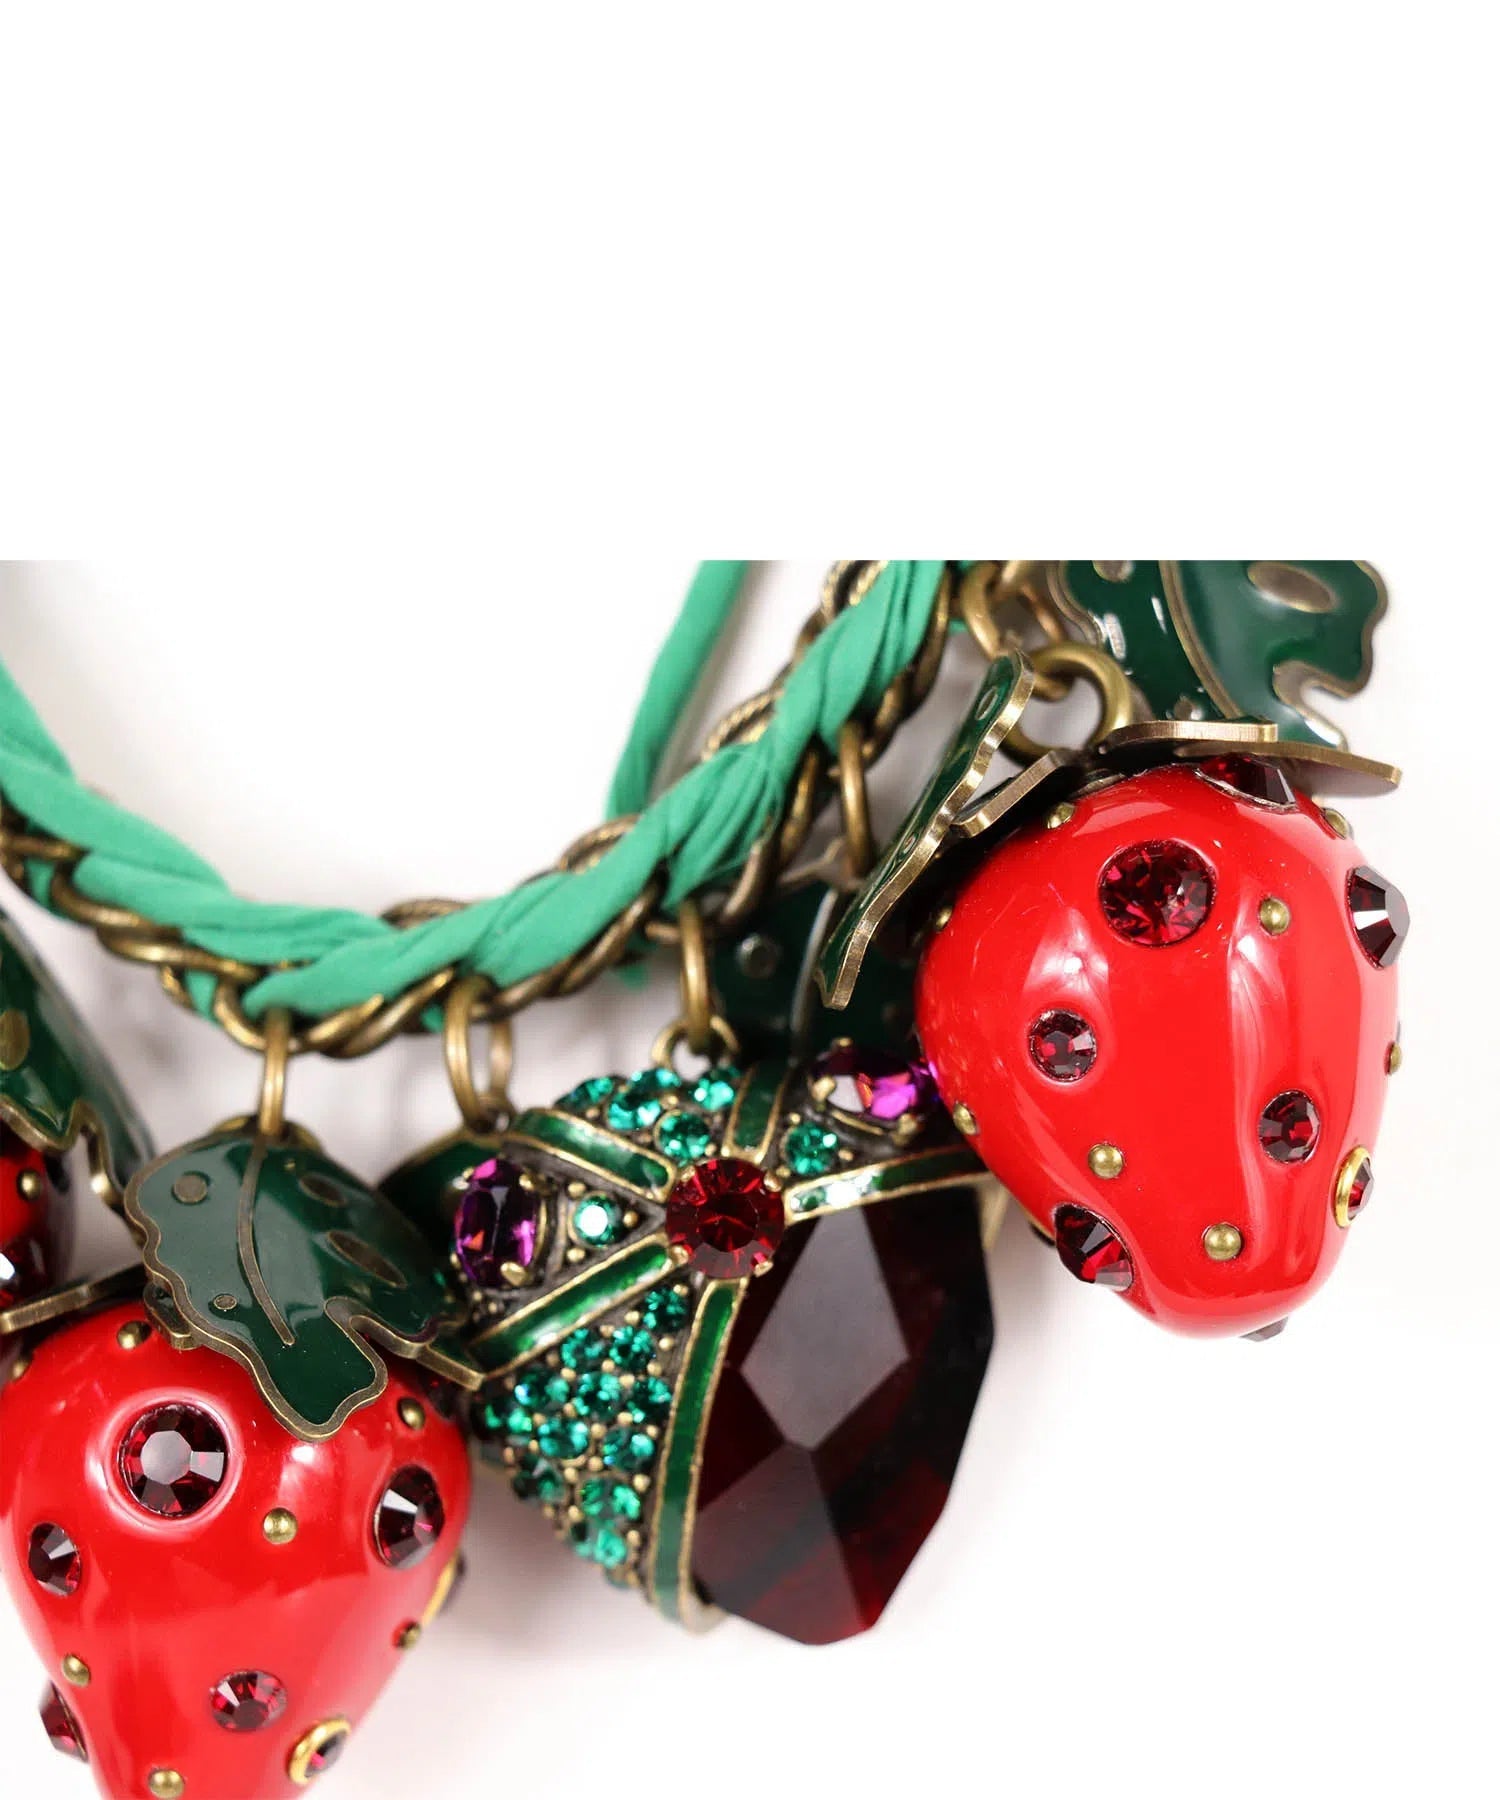 Lanvin Strawberry & Pearl Necklace - Foxy Couture Carmel